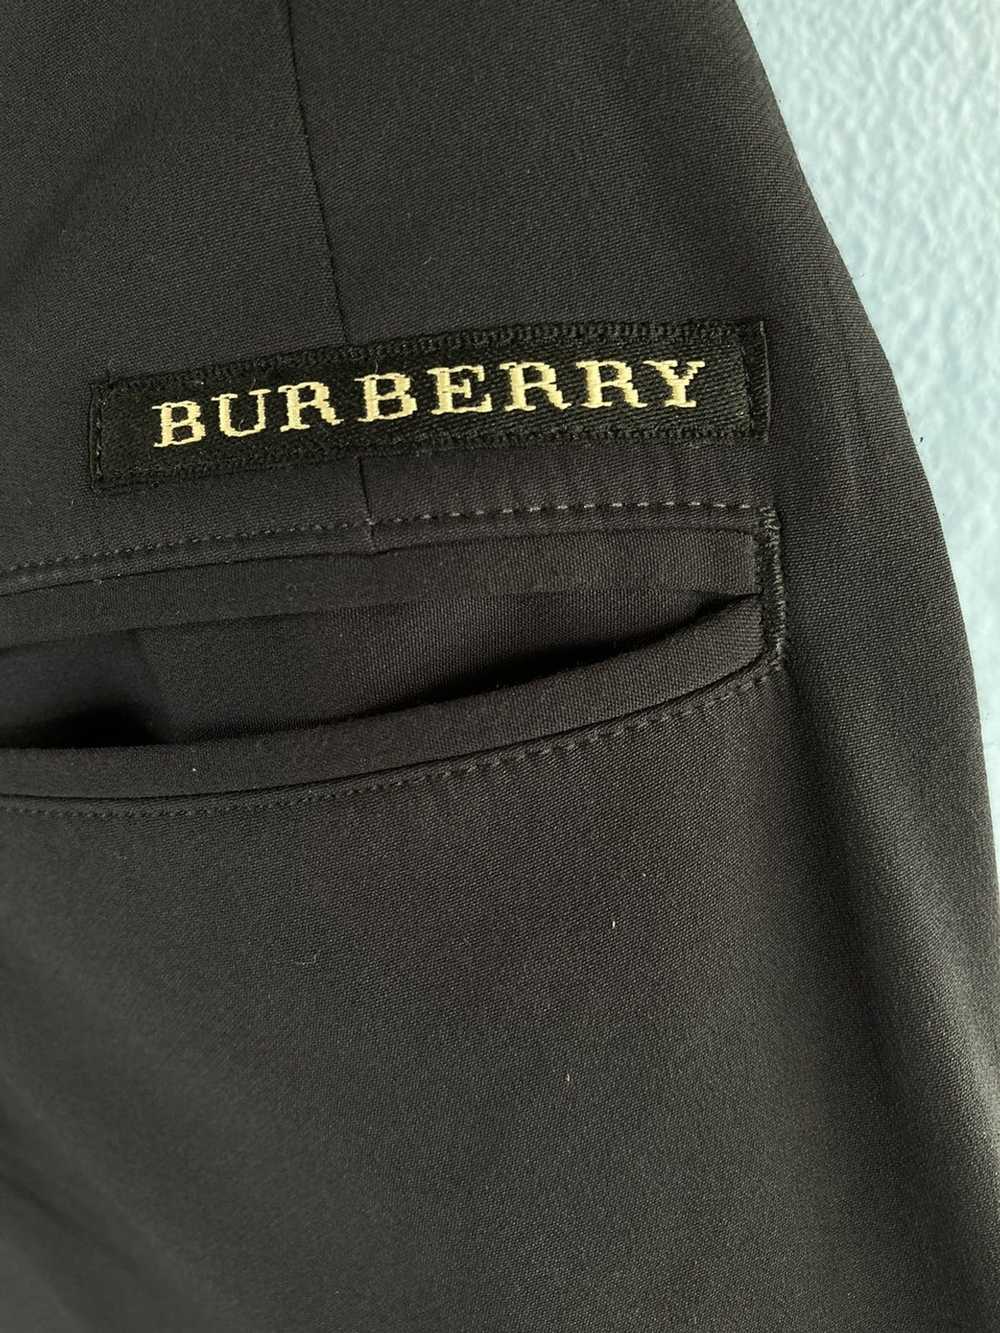 Burberry × Vintage Burberry golf slack pants - image 6